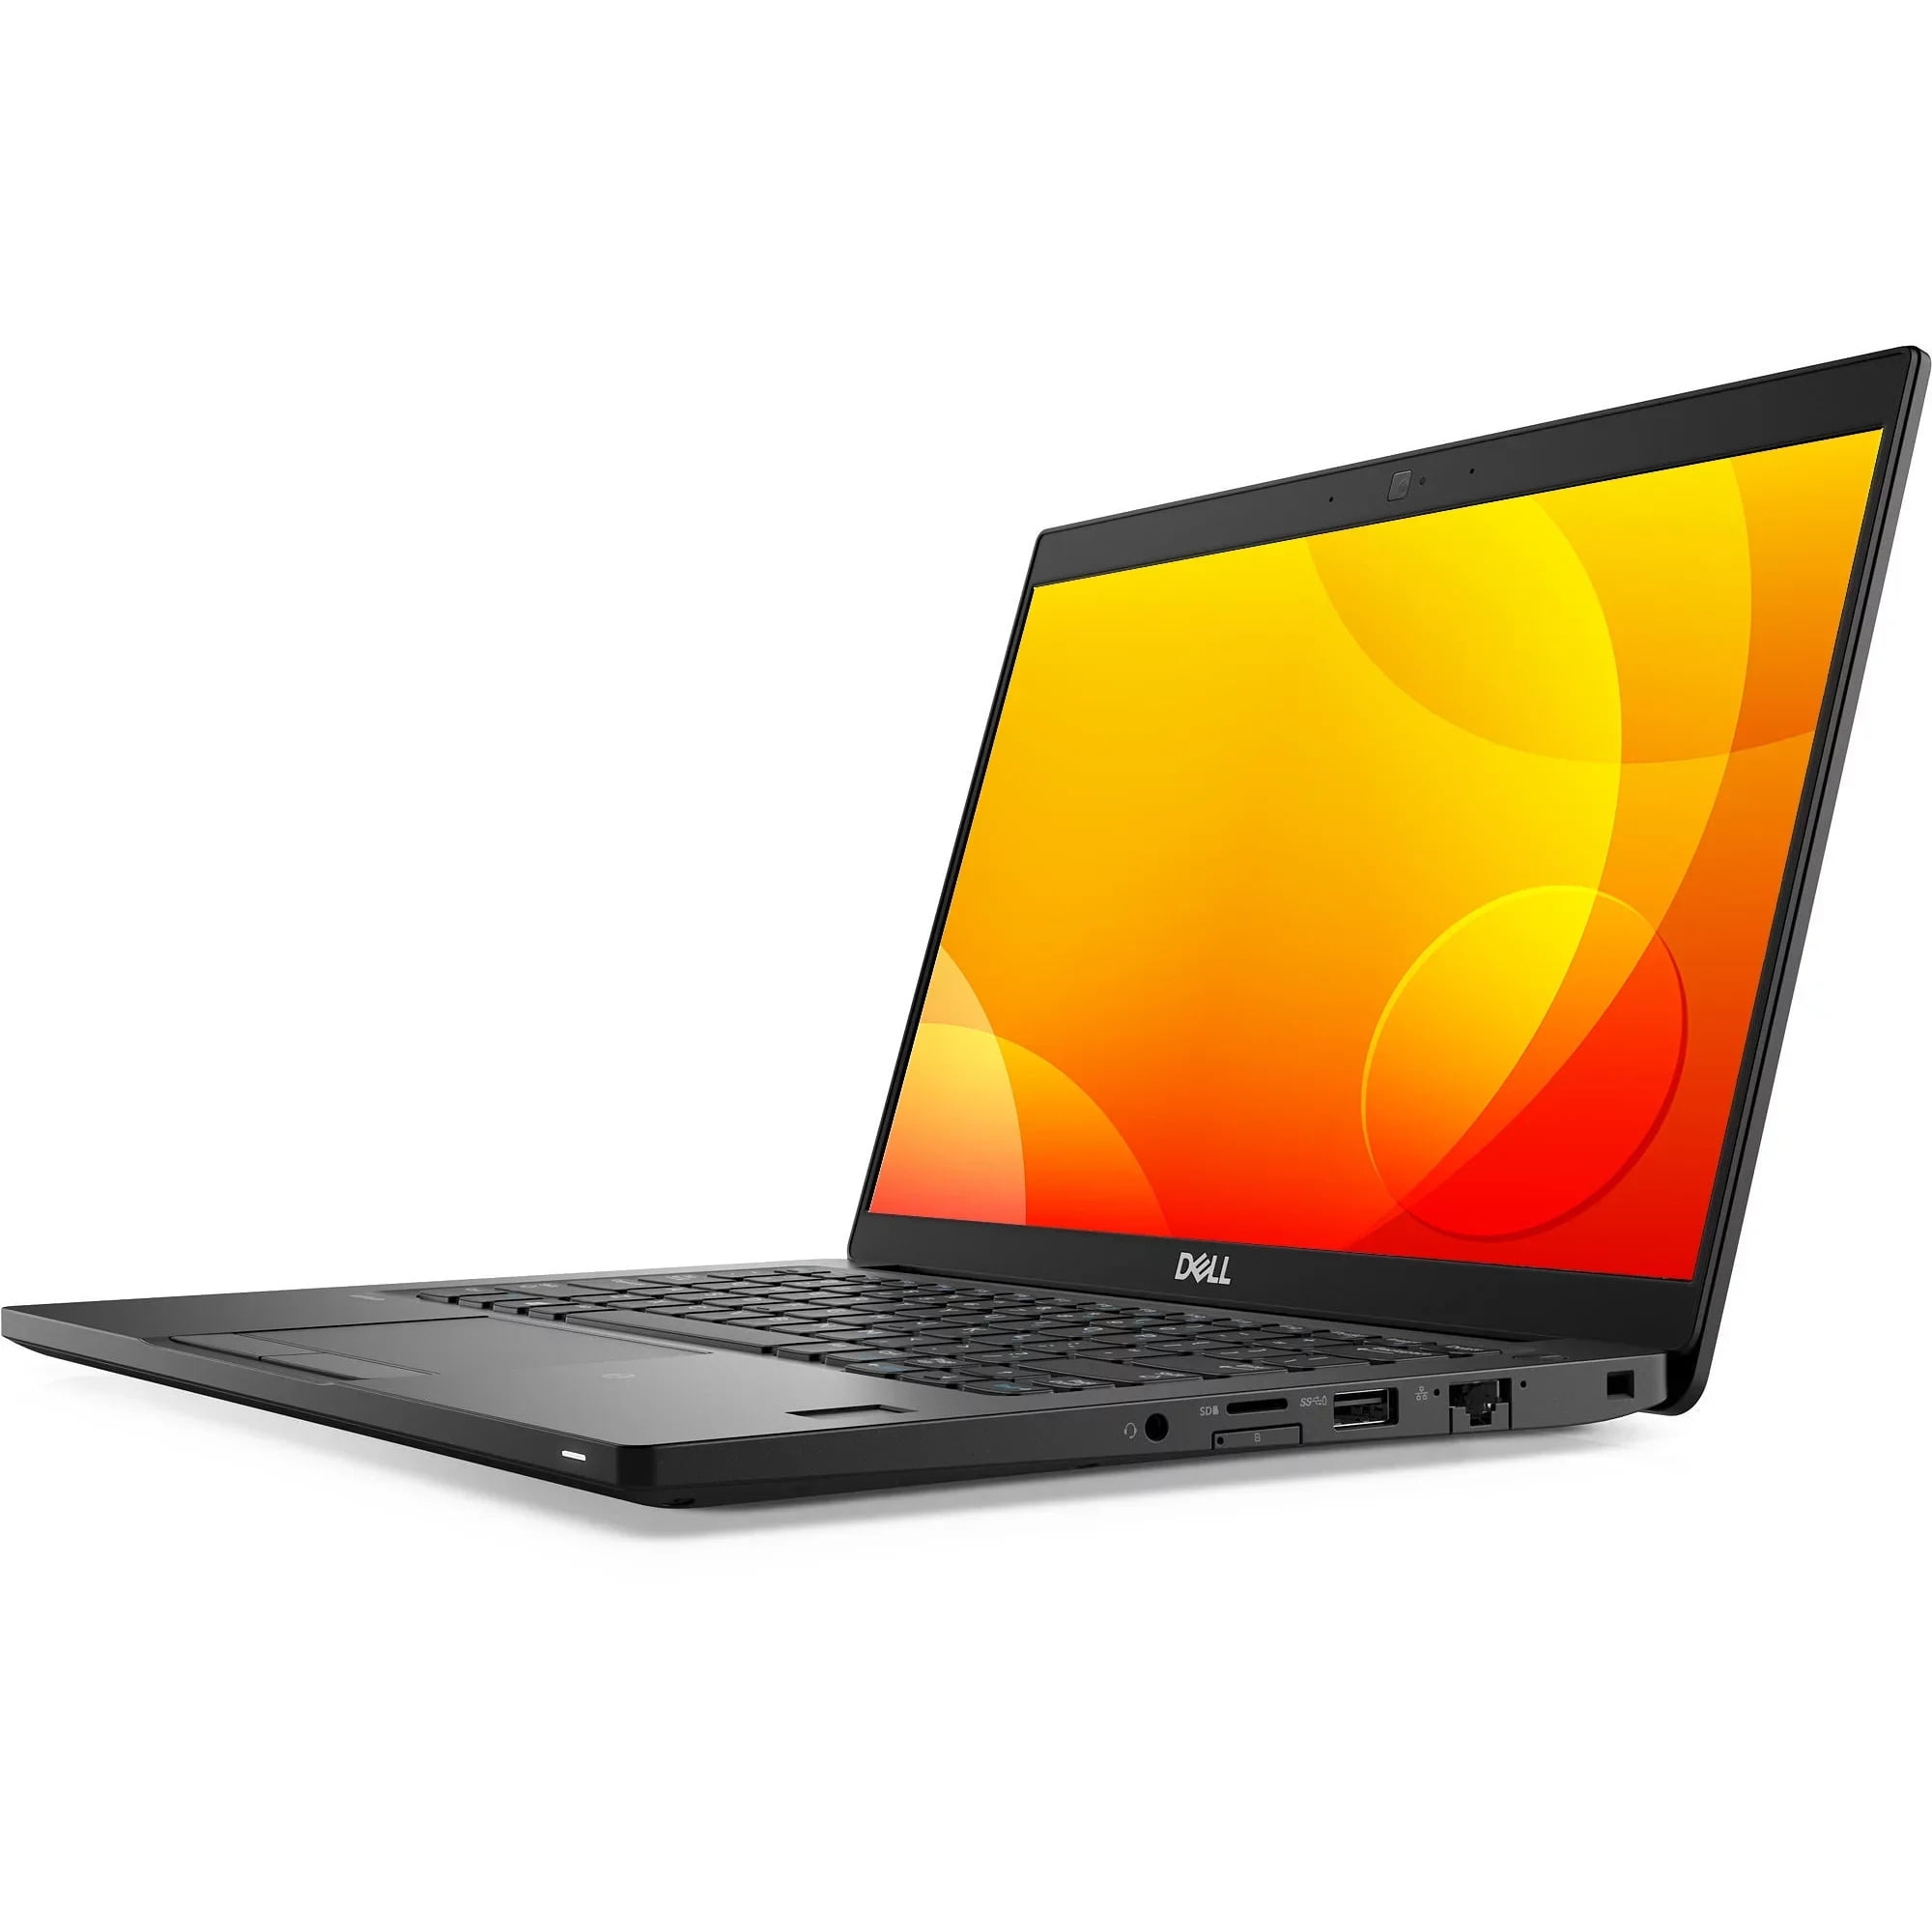 Dell Latitude 7390 13 Laptop- 8th Gen Intel Core i7, 8GB-32GB RAM